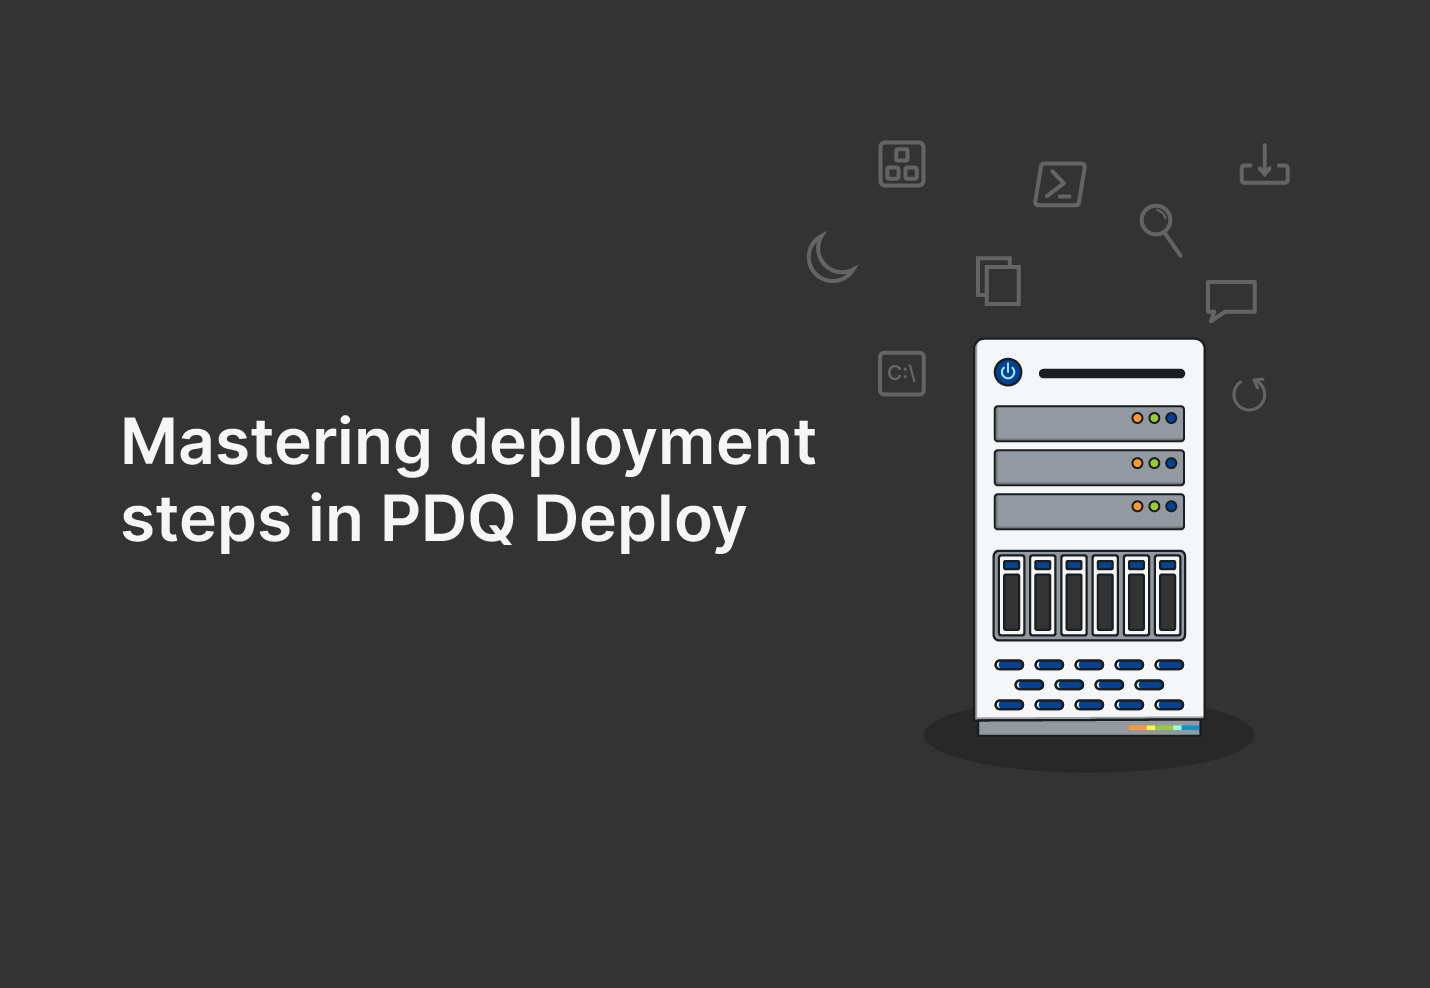 download the last version for windows PDQ Deploy Enterprise 19.3.464.0